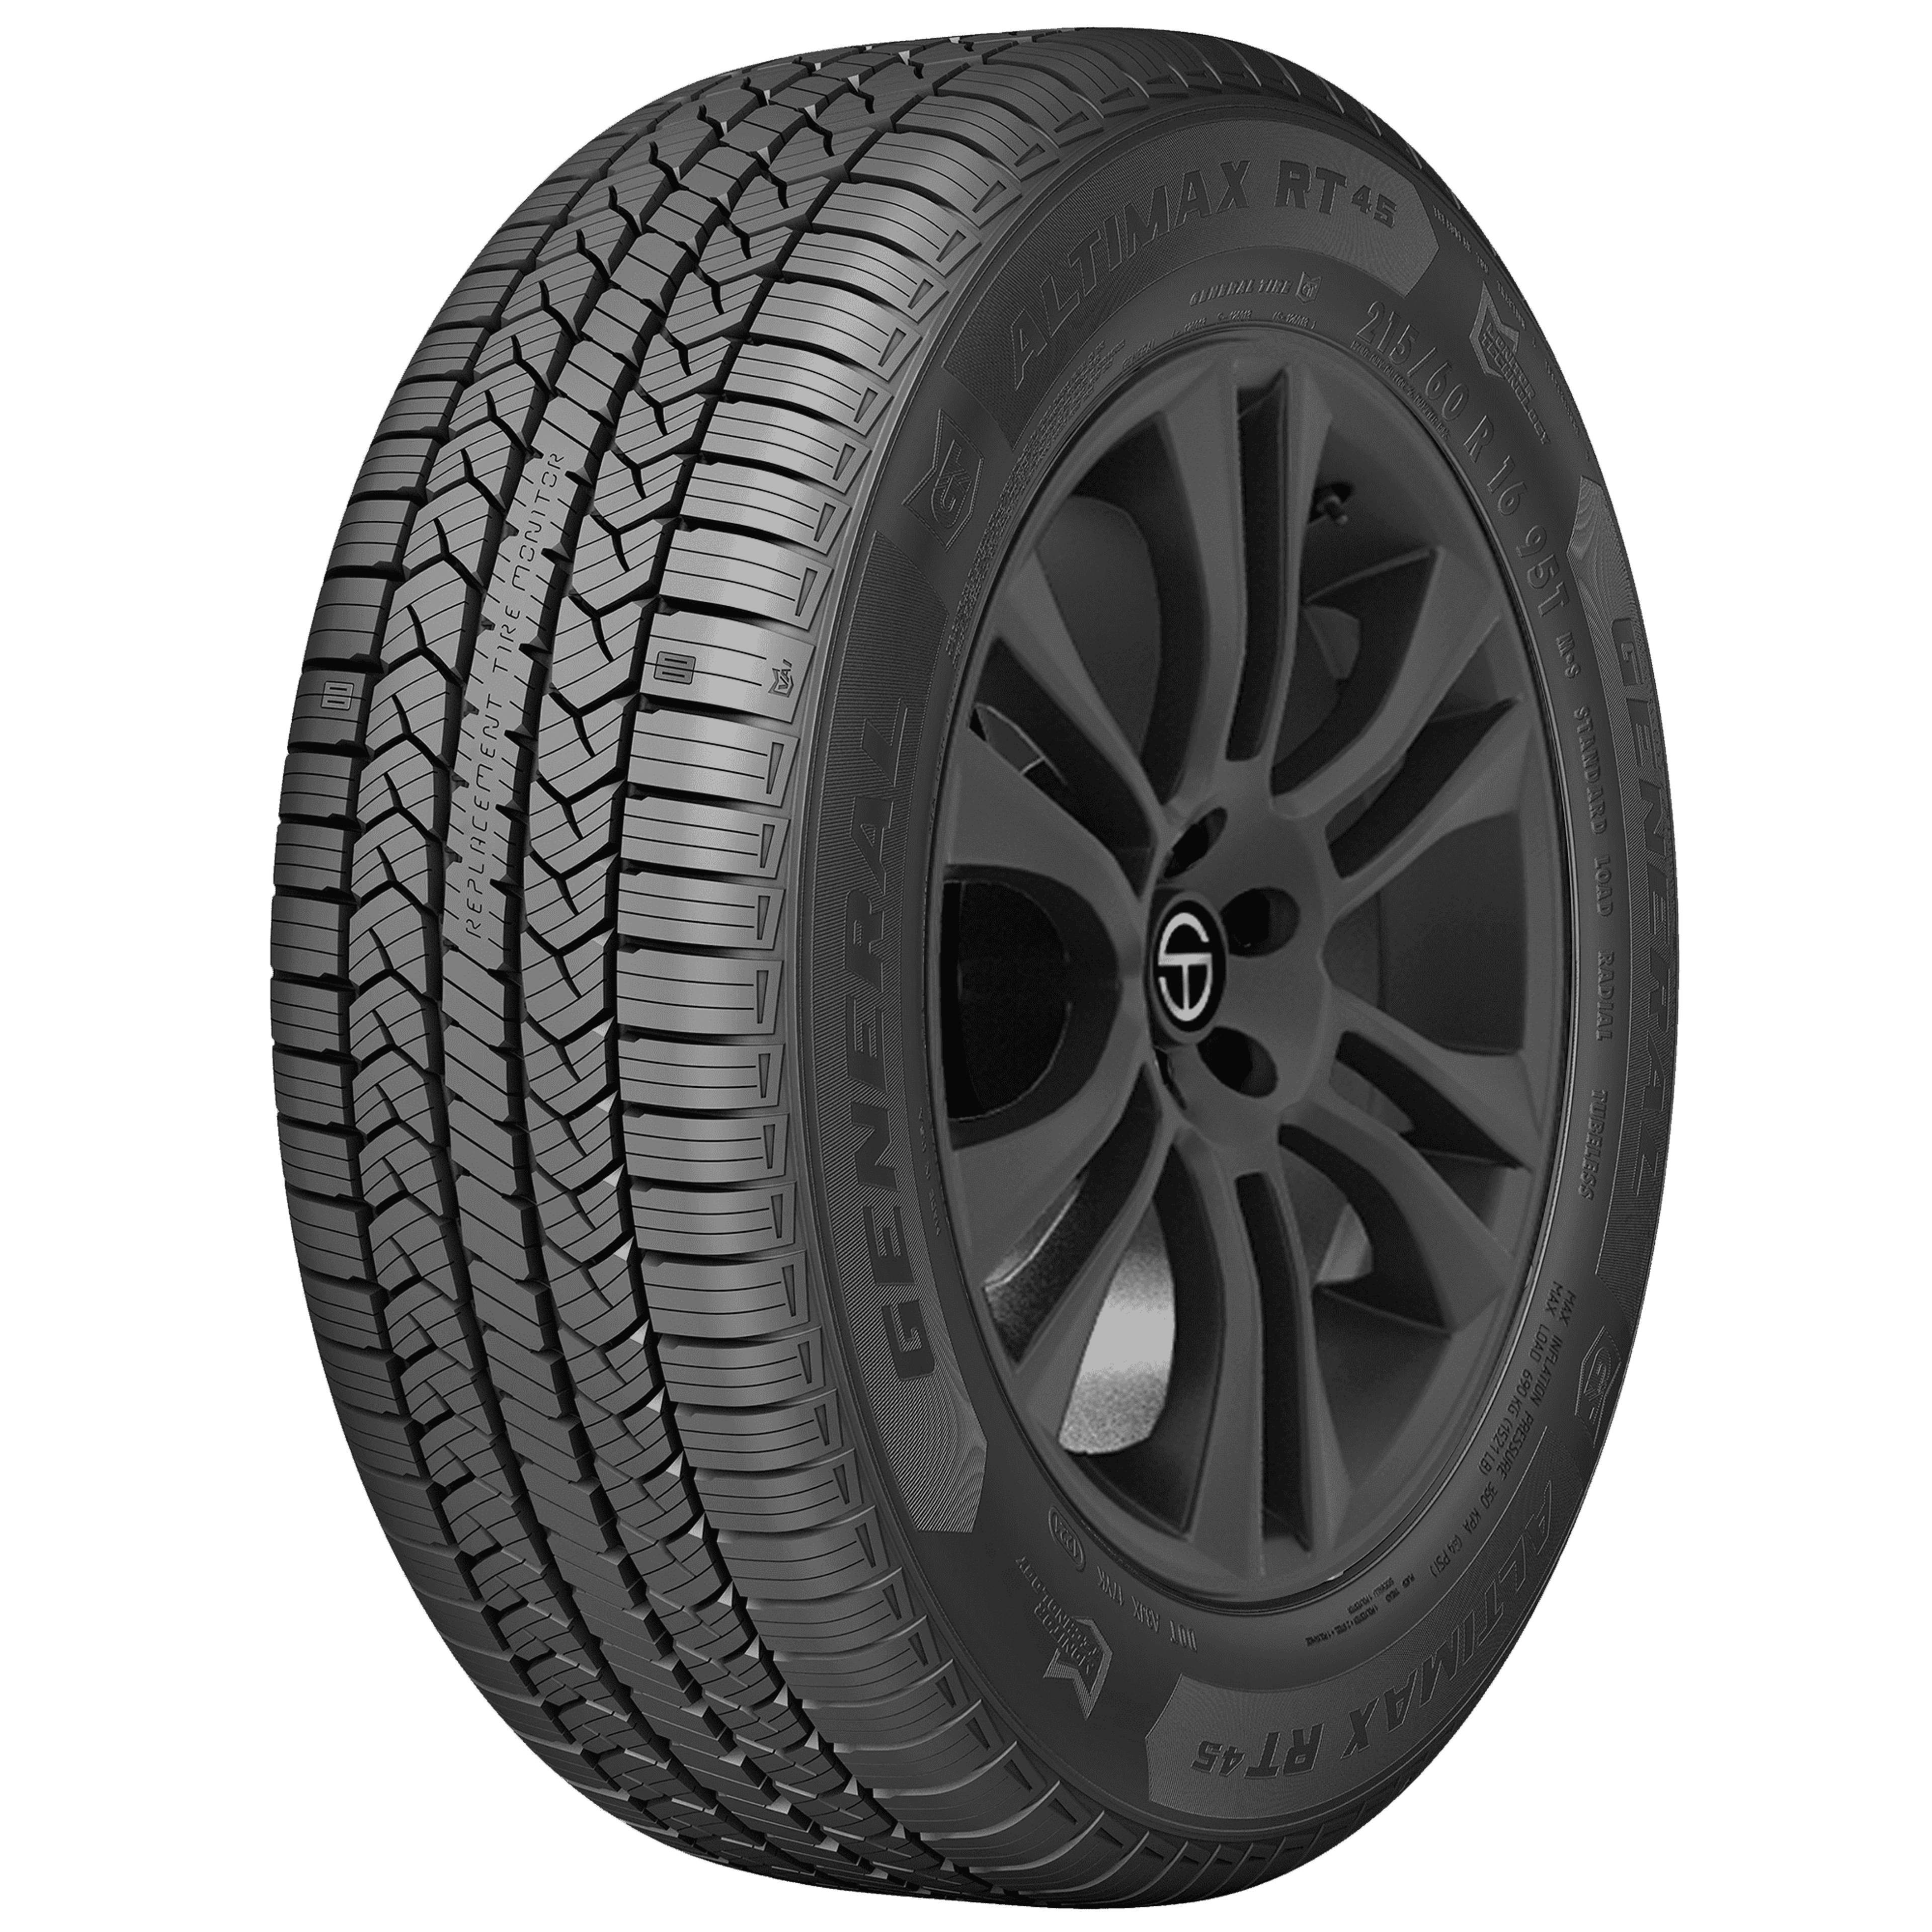 175/65R15 Tires  Find & Buy New Tires - Online